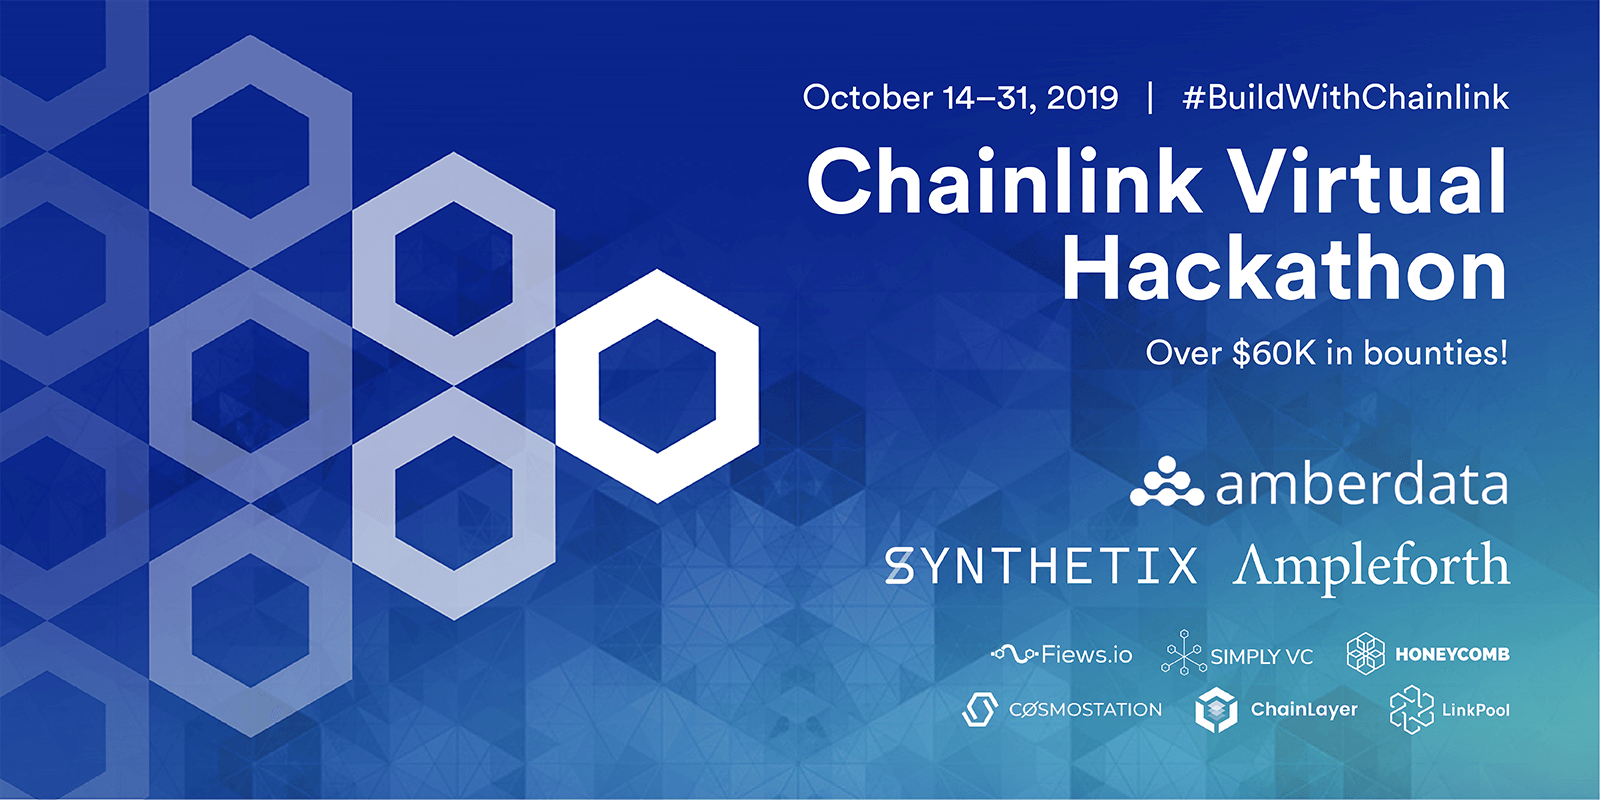 An event banner announcing the Chainlink Virtual Hackathon.